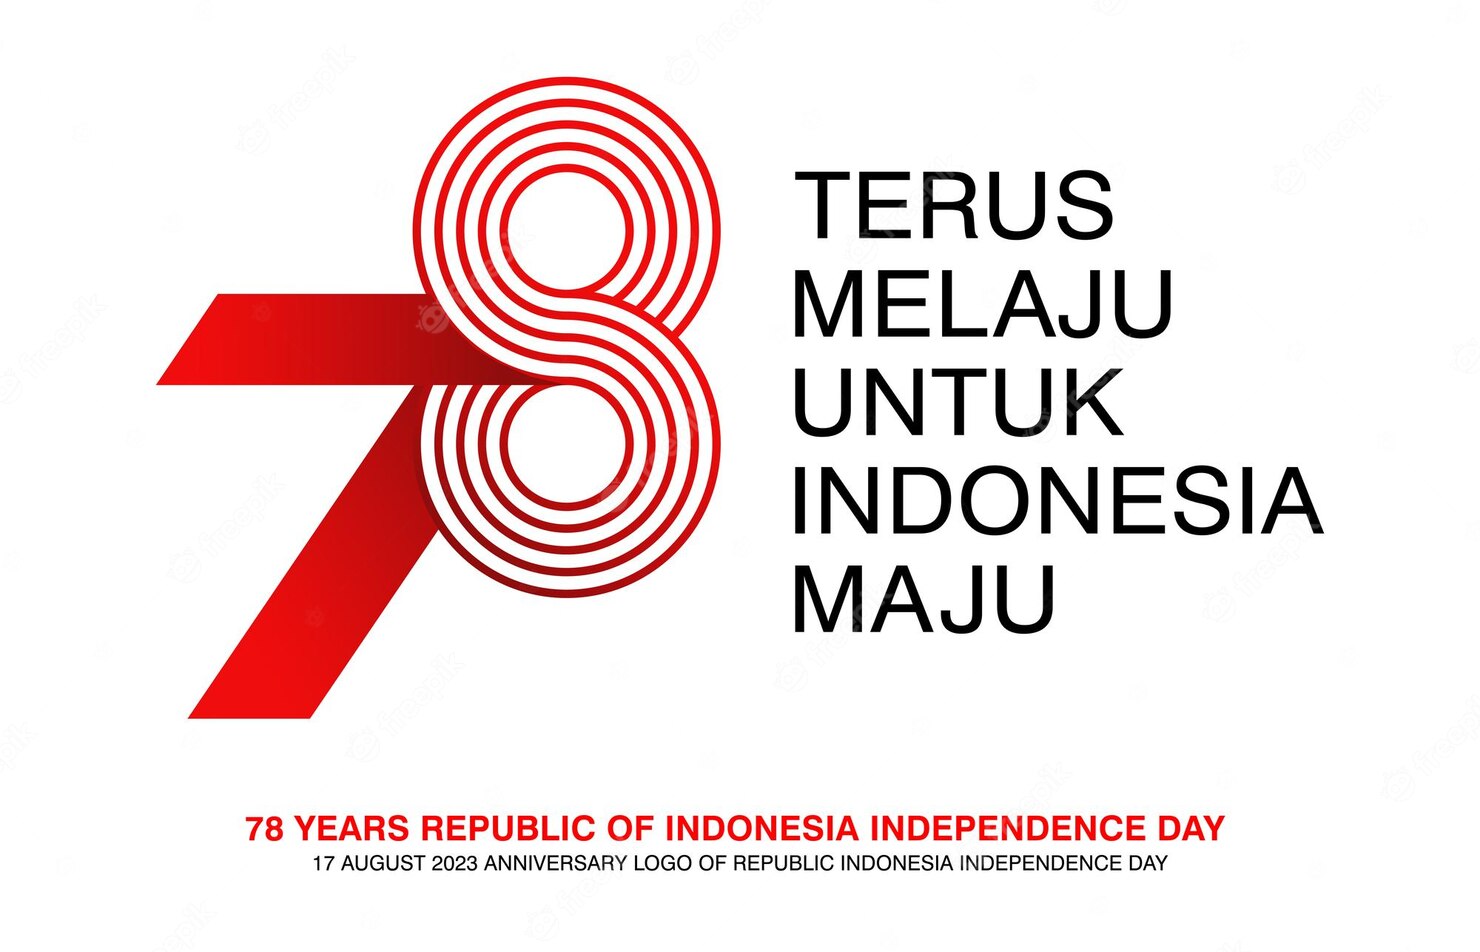 Ayo Meriahkan Ulang Tahun Kemerdekaan Ke-78 Indonesia dengan Lomba dan Kegiatan Penuh Semangat